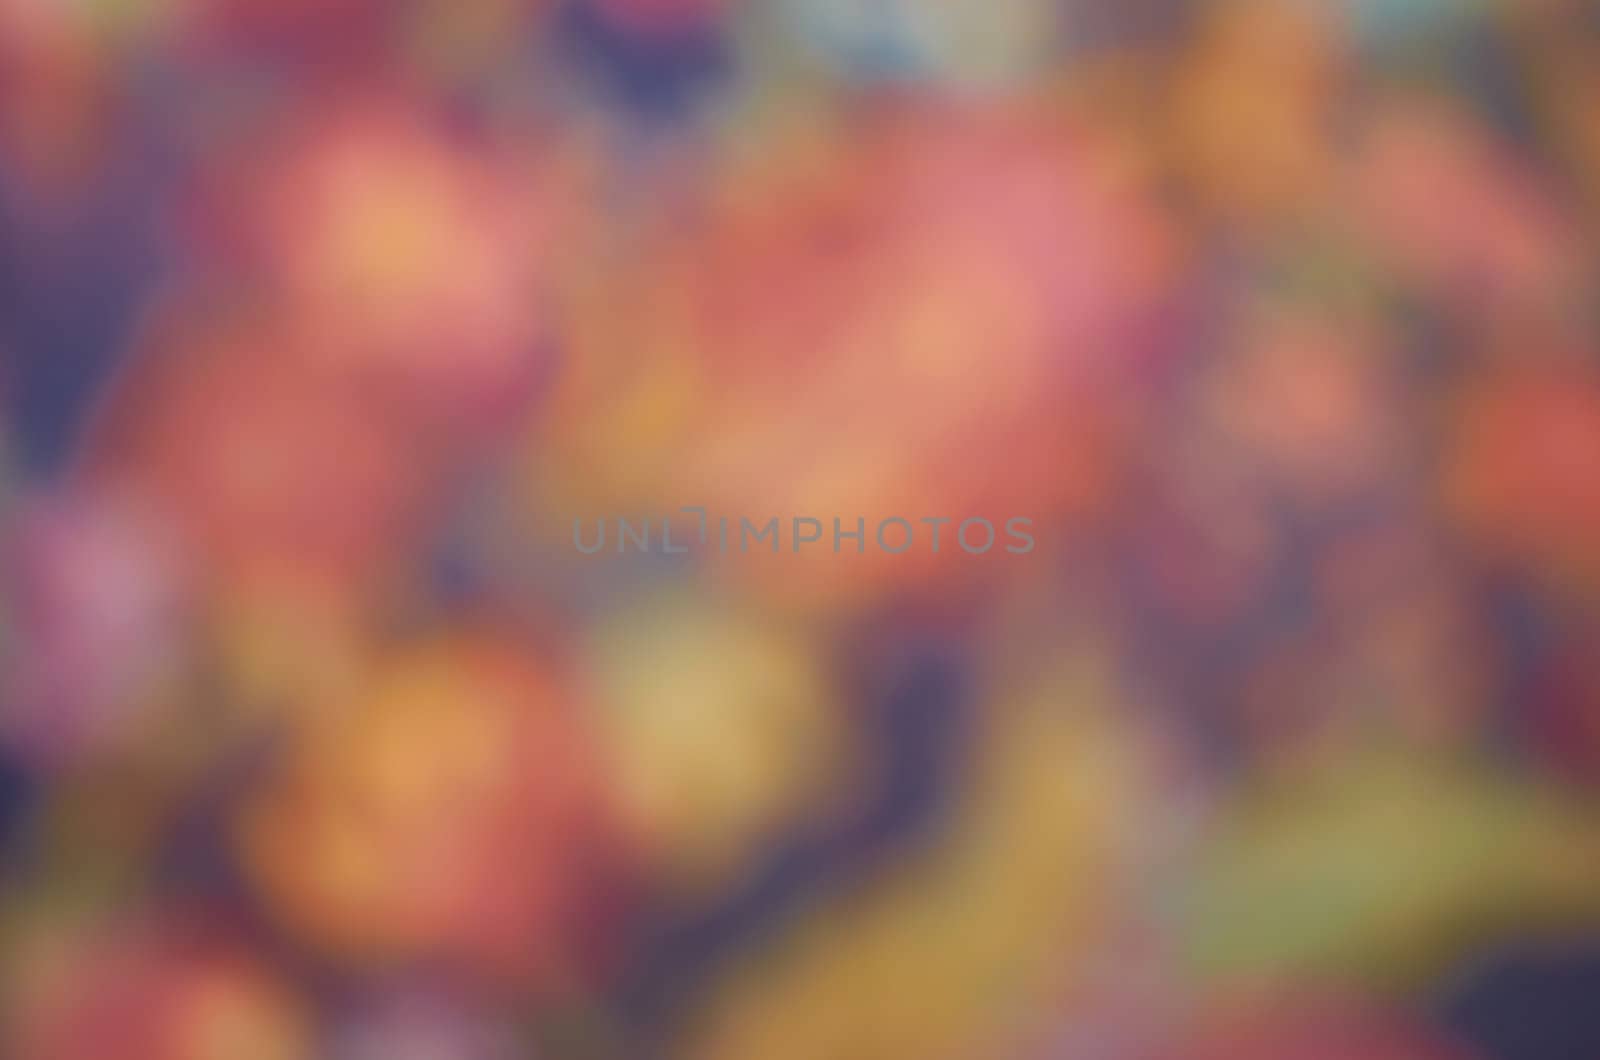 Unusual multicolored blurry spots in a festive background